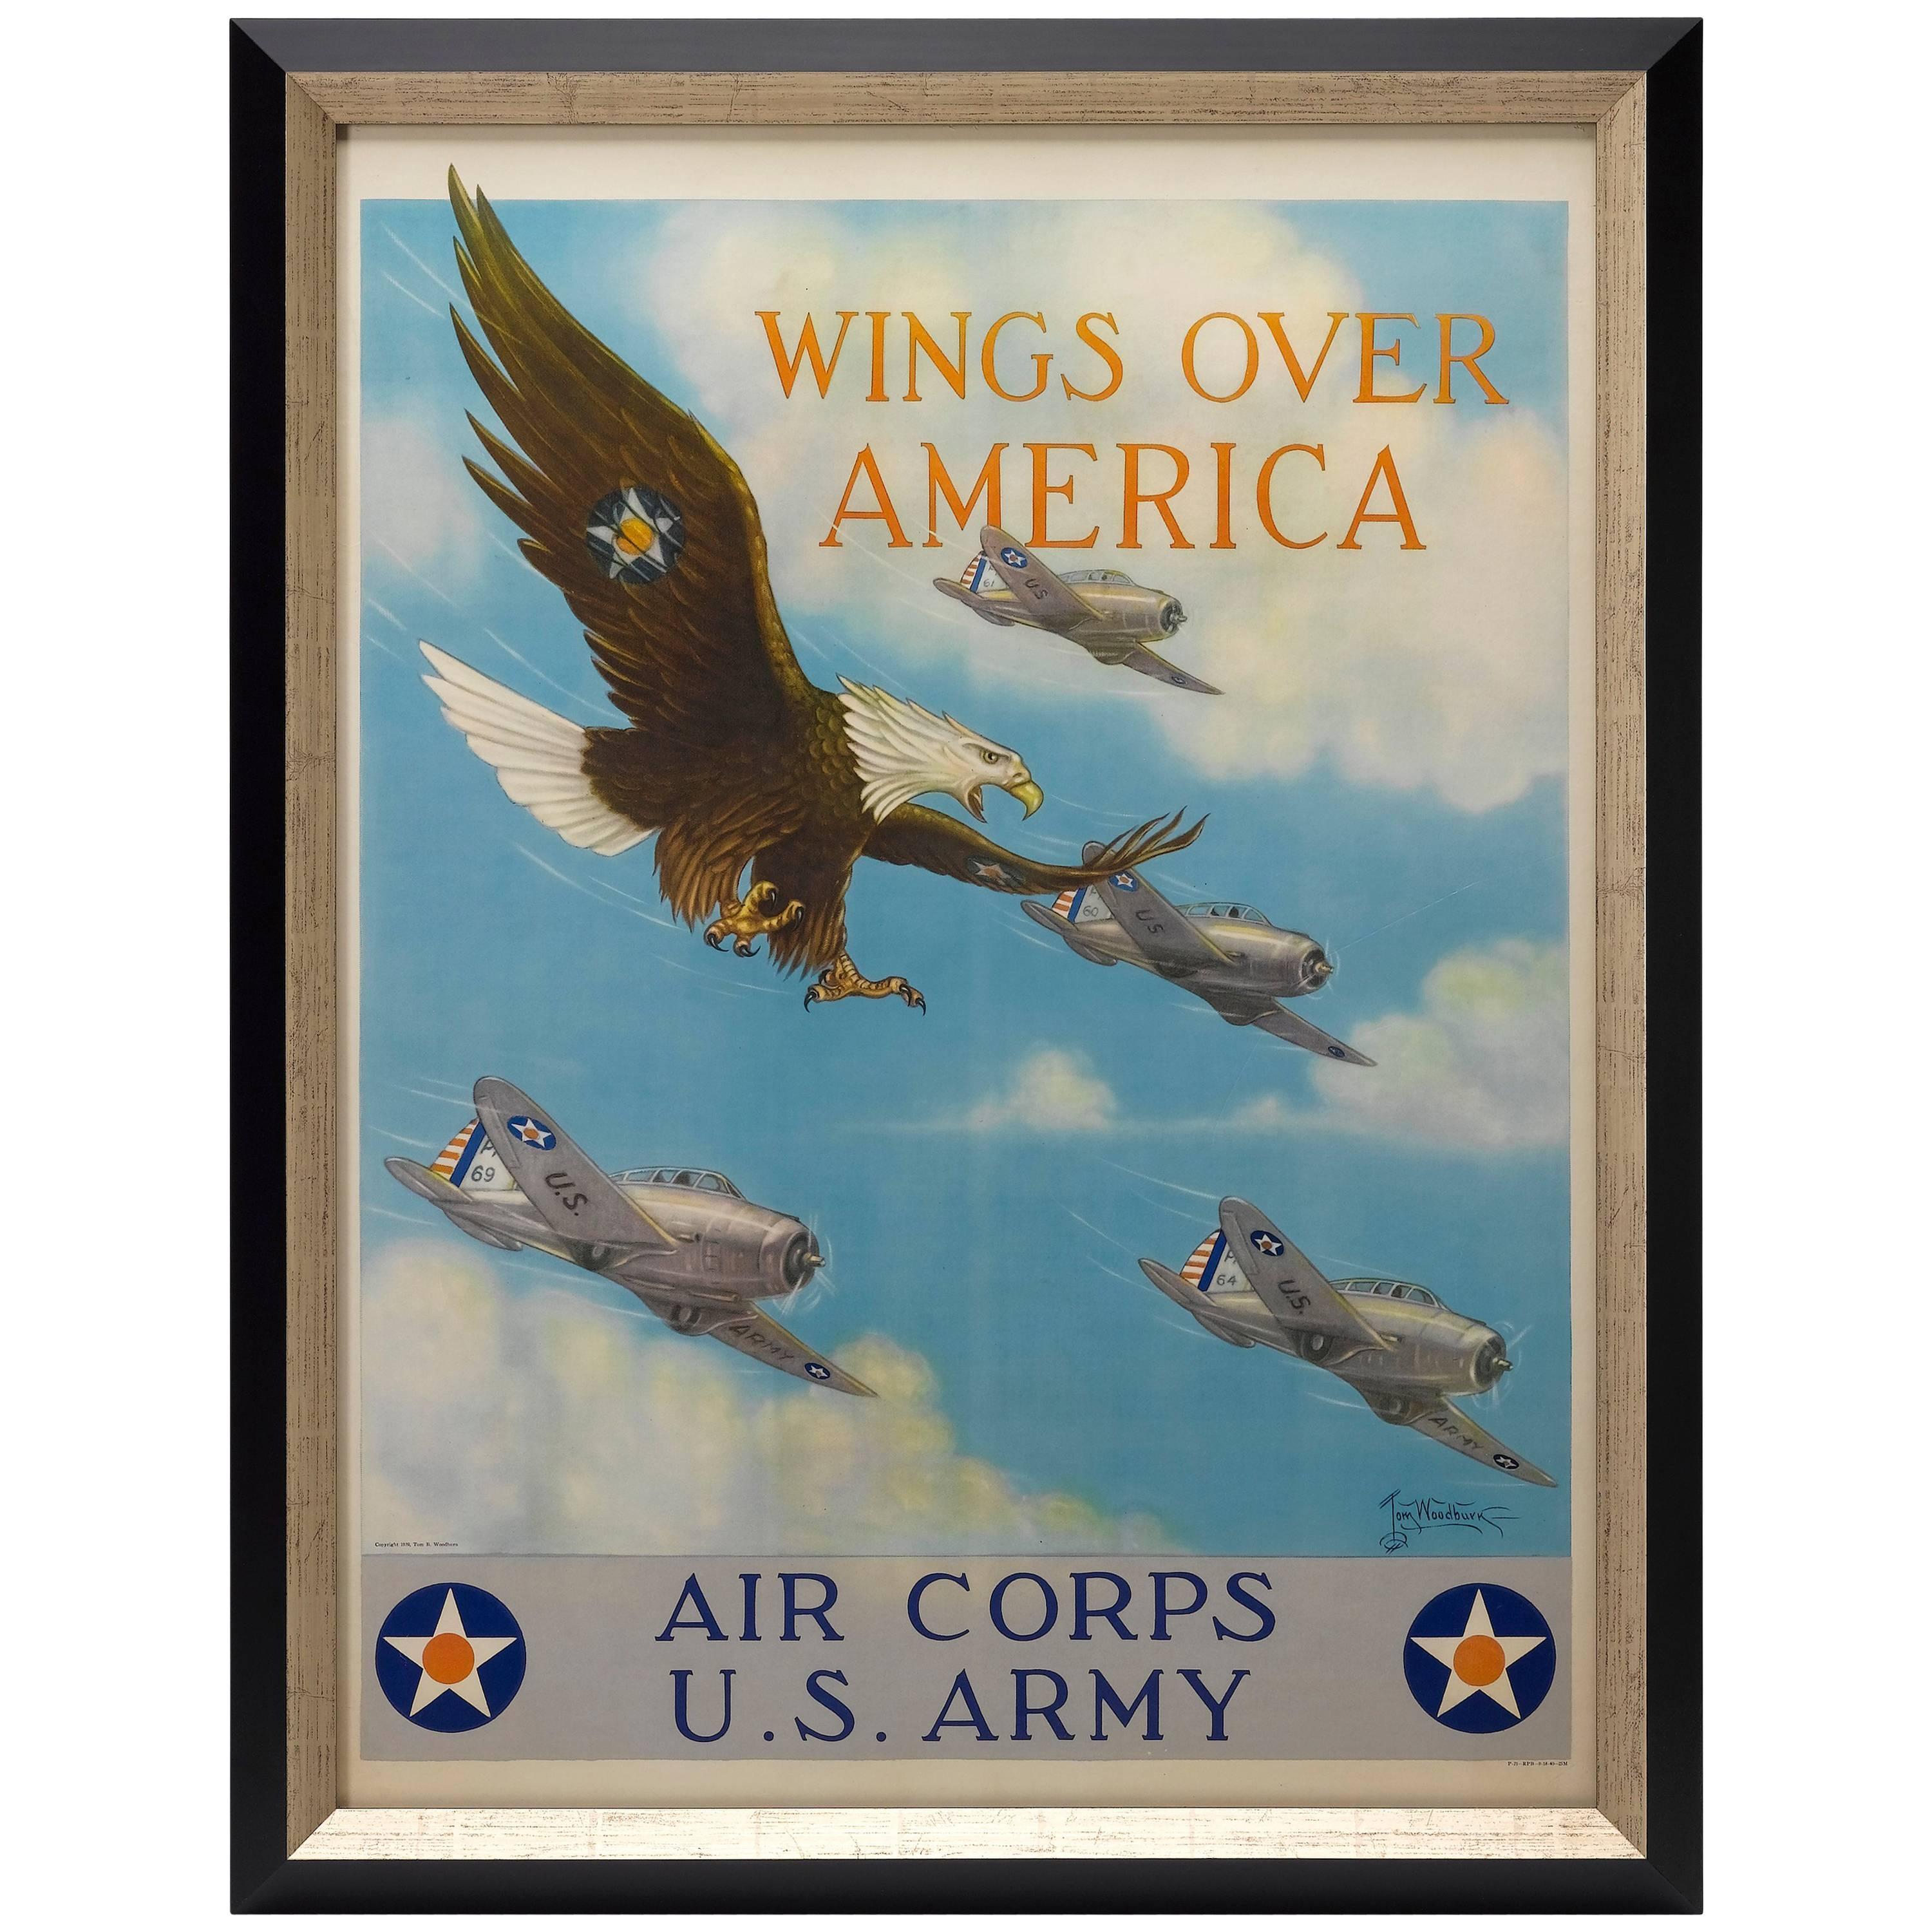 Wings Over America WW II Era U.S. Army Air Corp Recruitment Poster, circa 1941